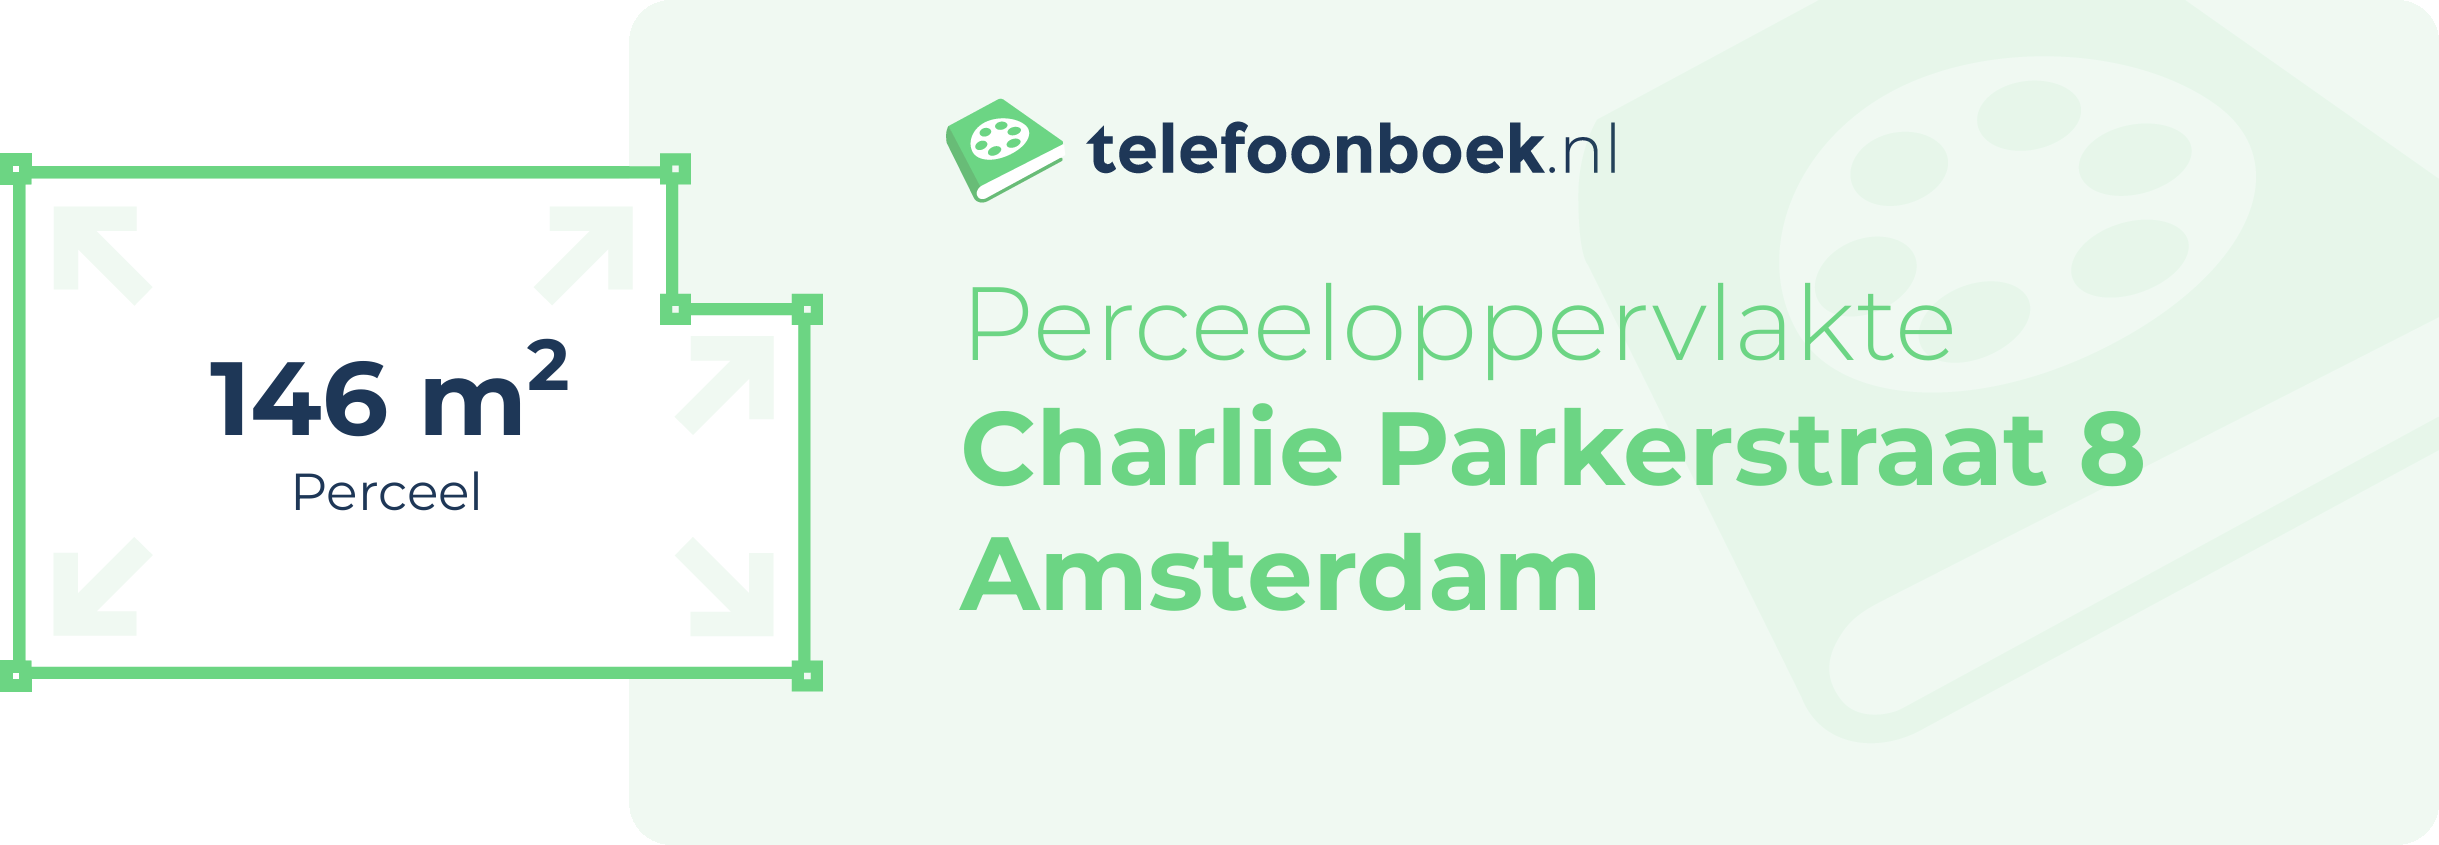 Perceeloppervlakte Charlie Parkerstraat 8 Amsterdam